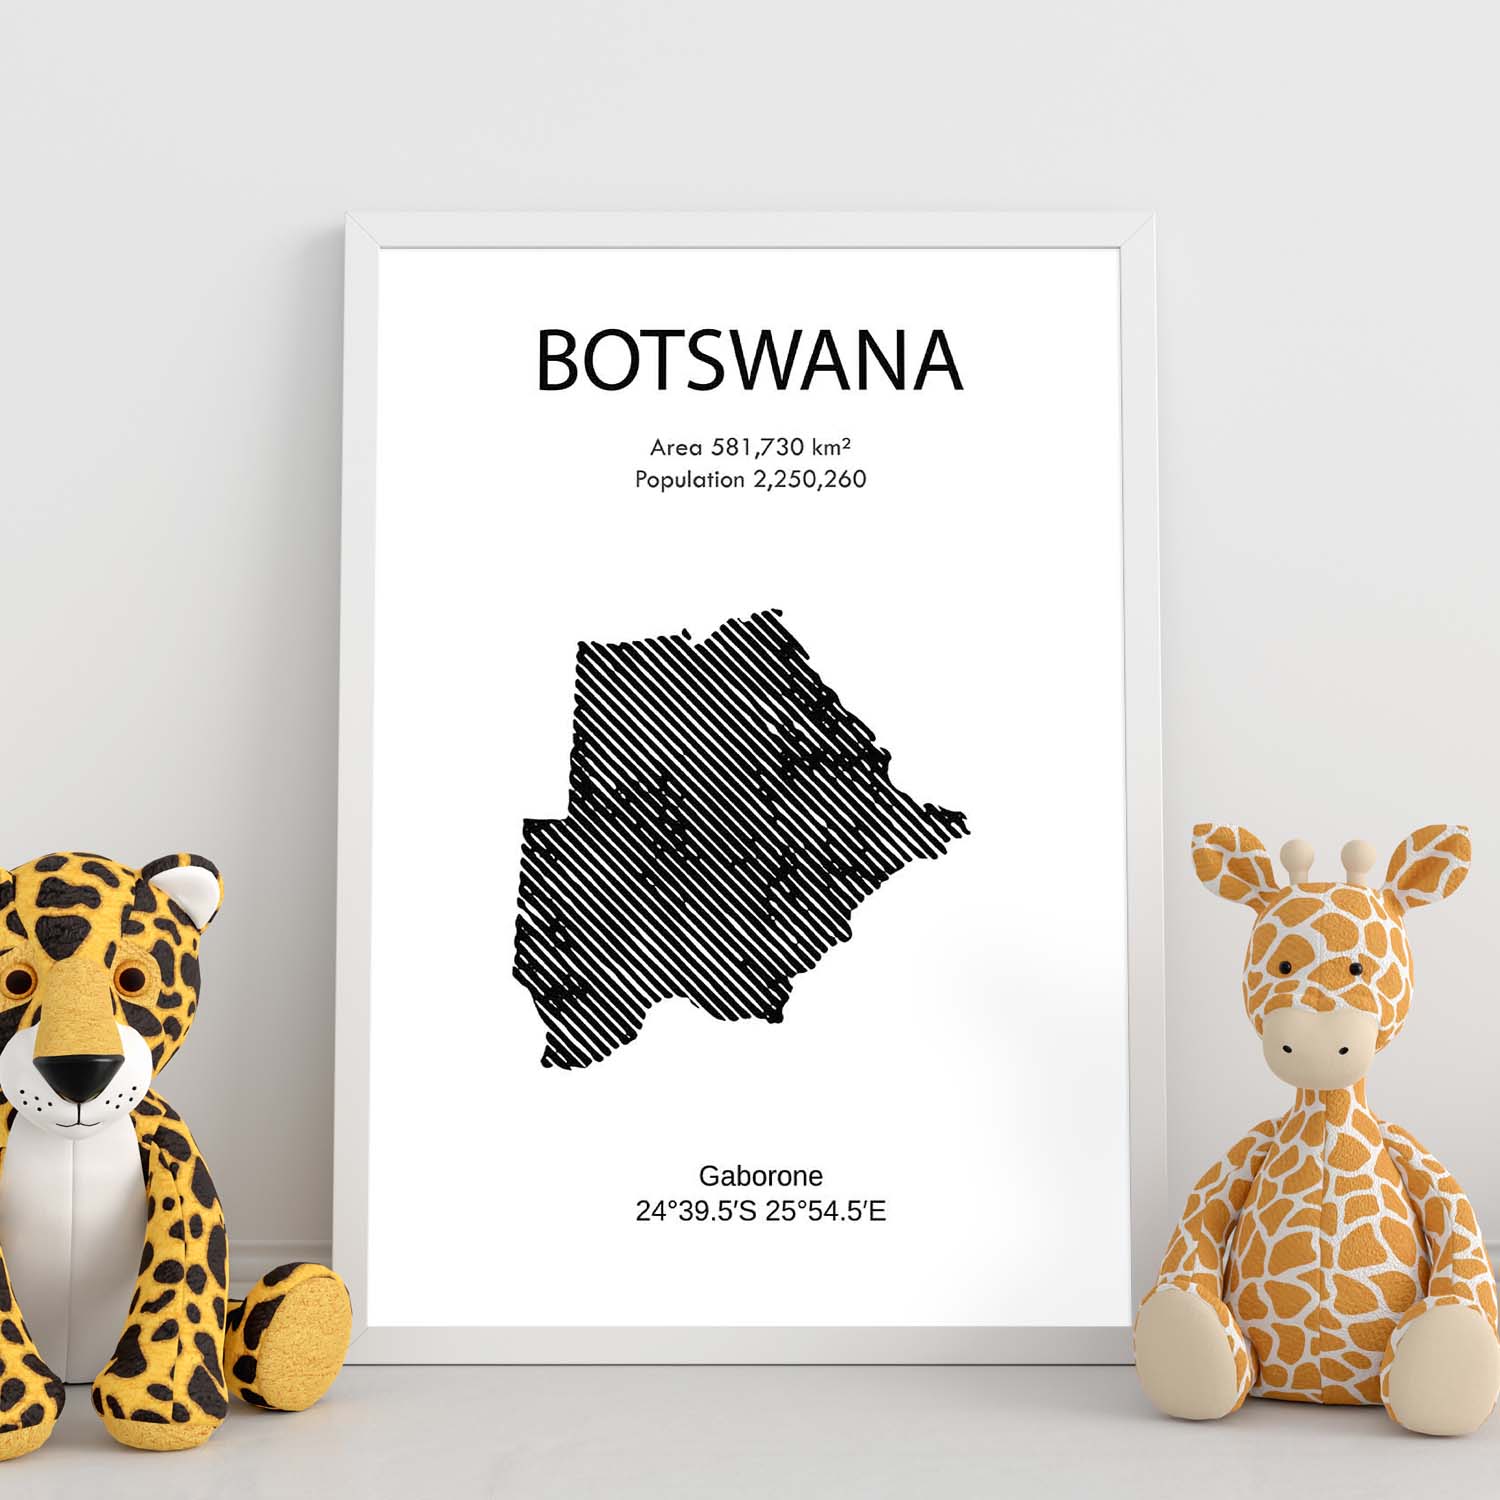 Poster de Botswana. Láminas de paises y continentes del mundo.-Artwork-Nacnic-Nacnic Estudio SL